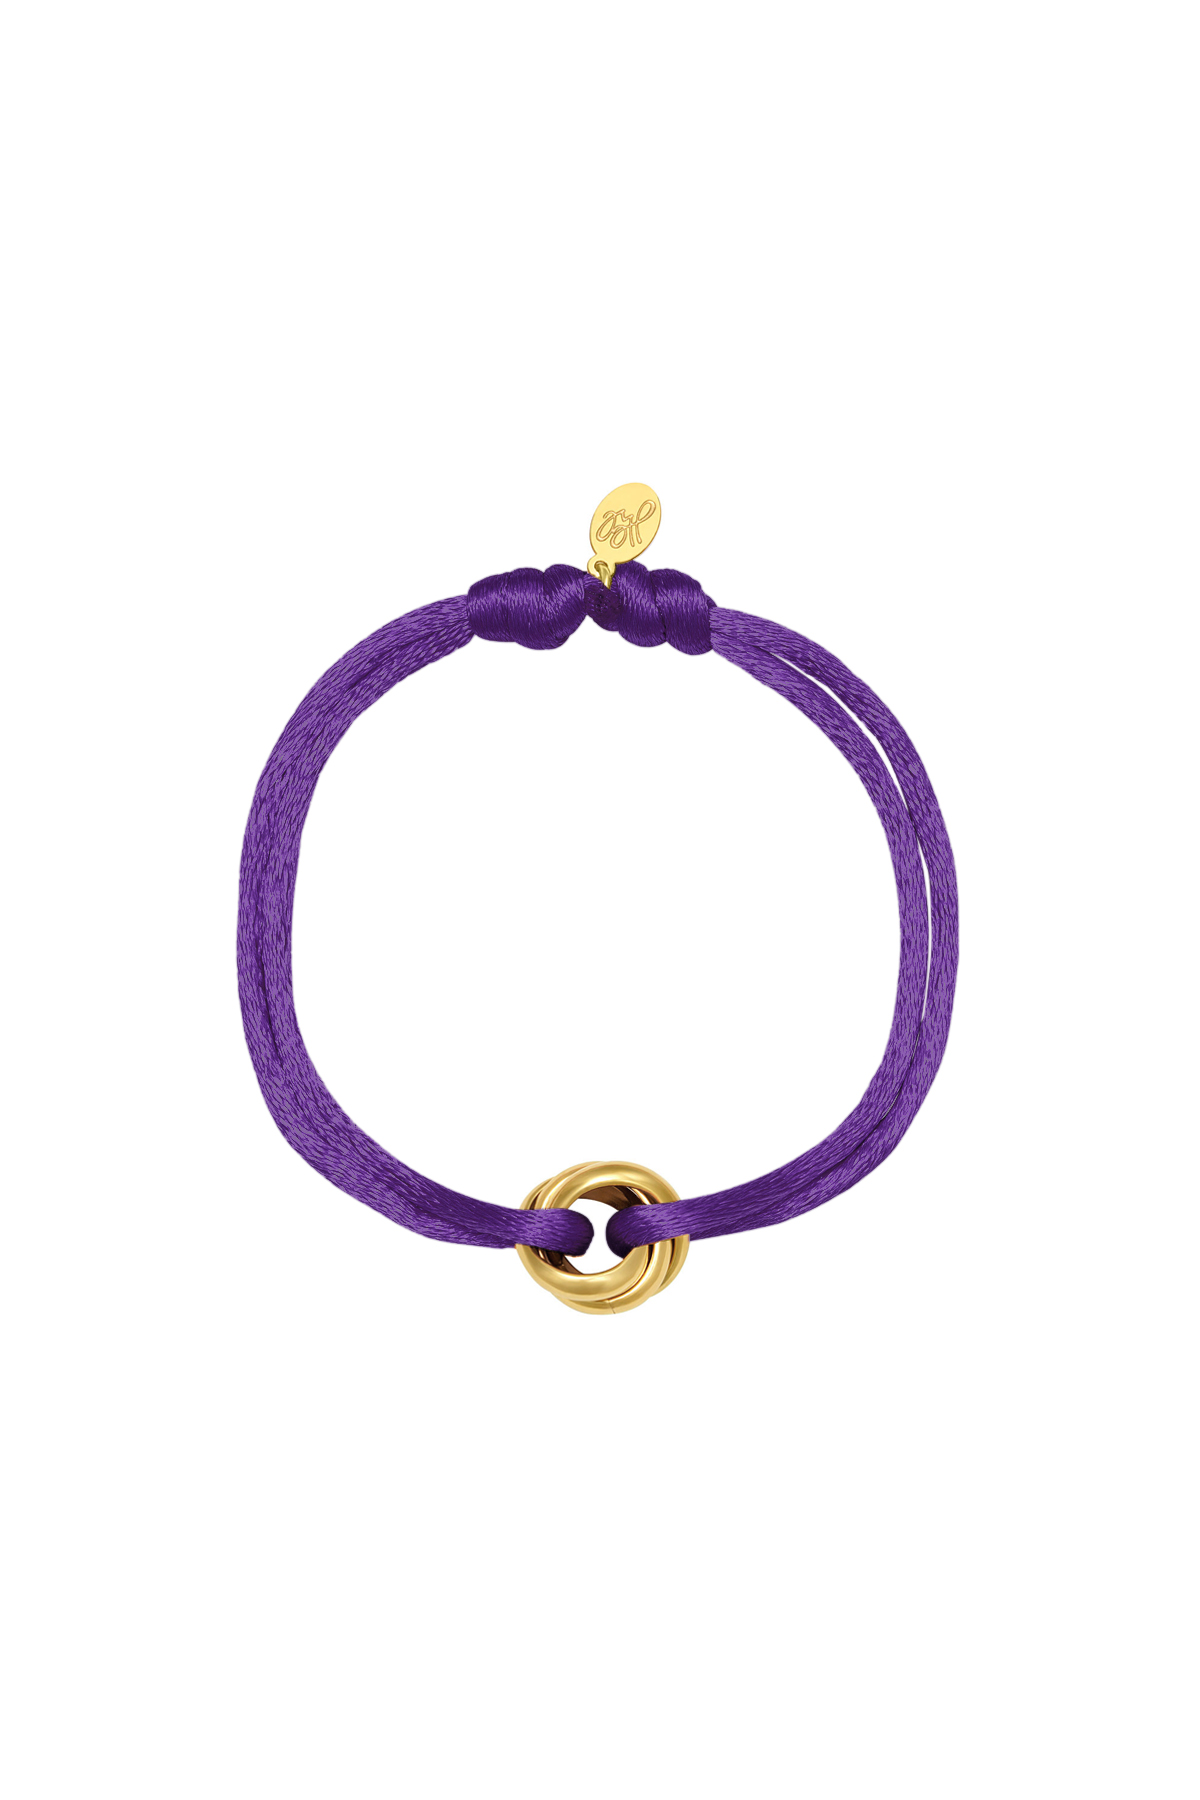 Lavande / Bracelet Noeud Satin violet Acier Inoxydable Image13